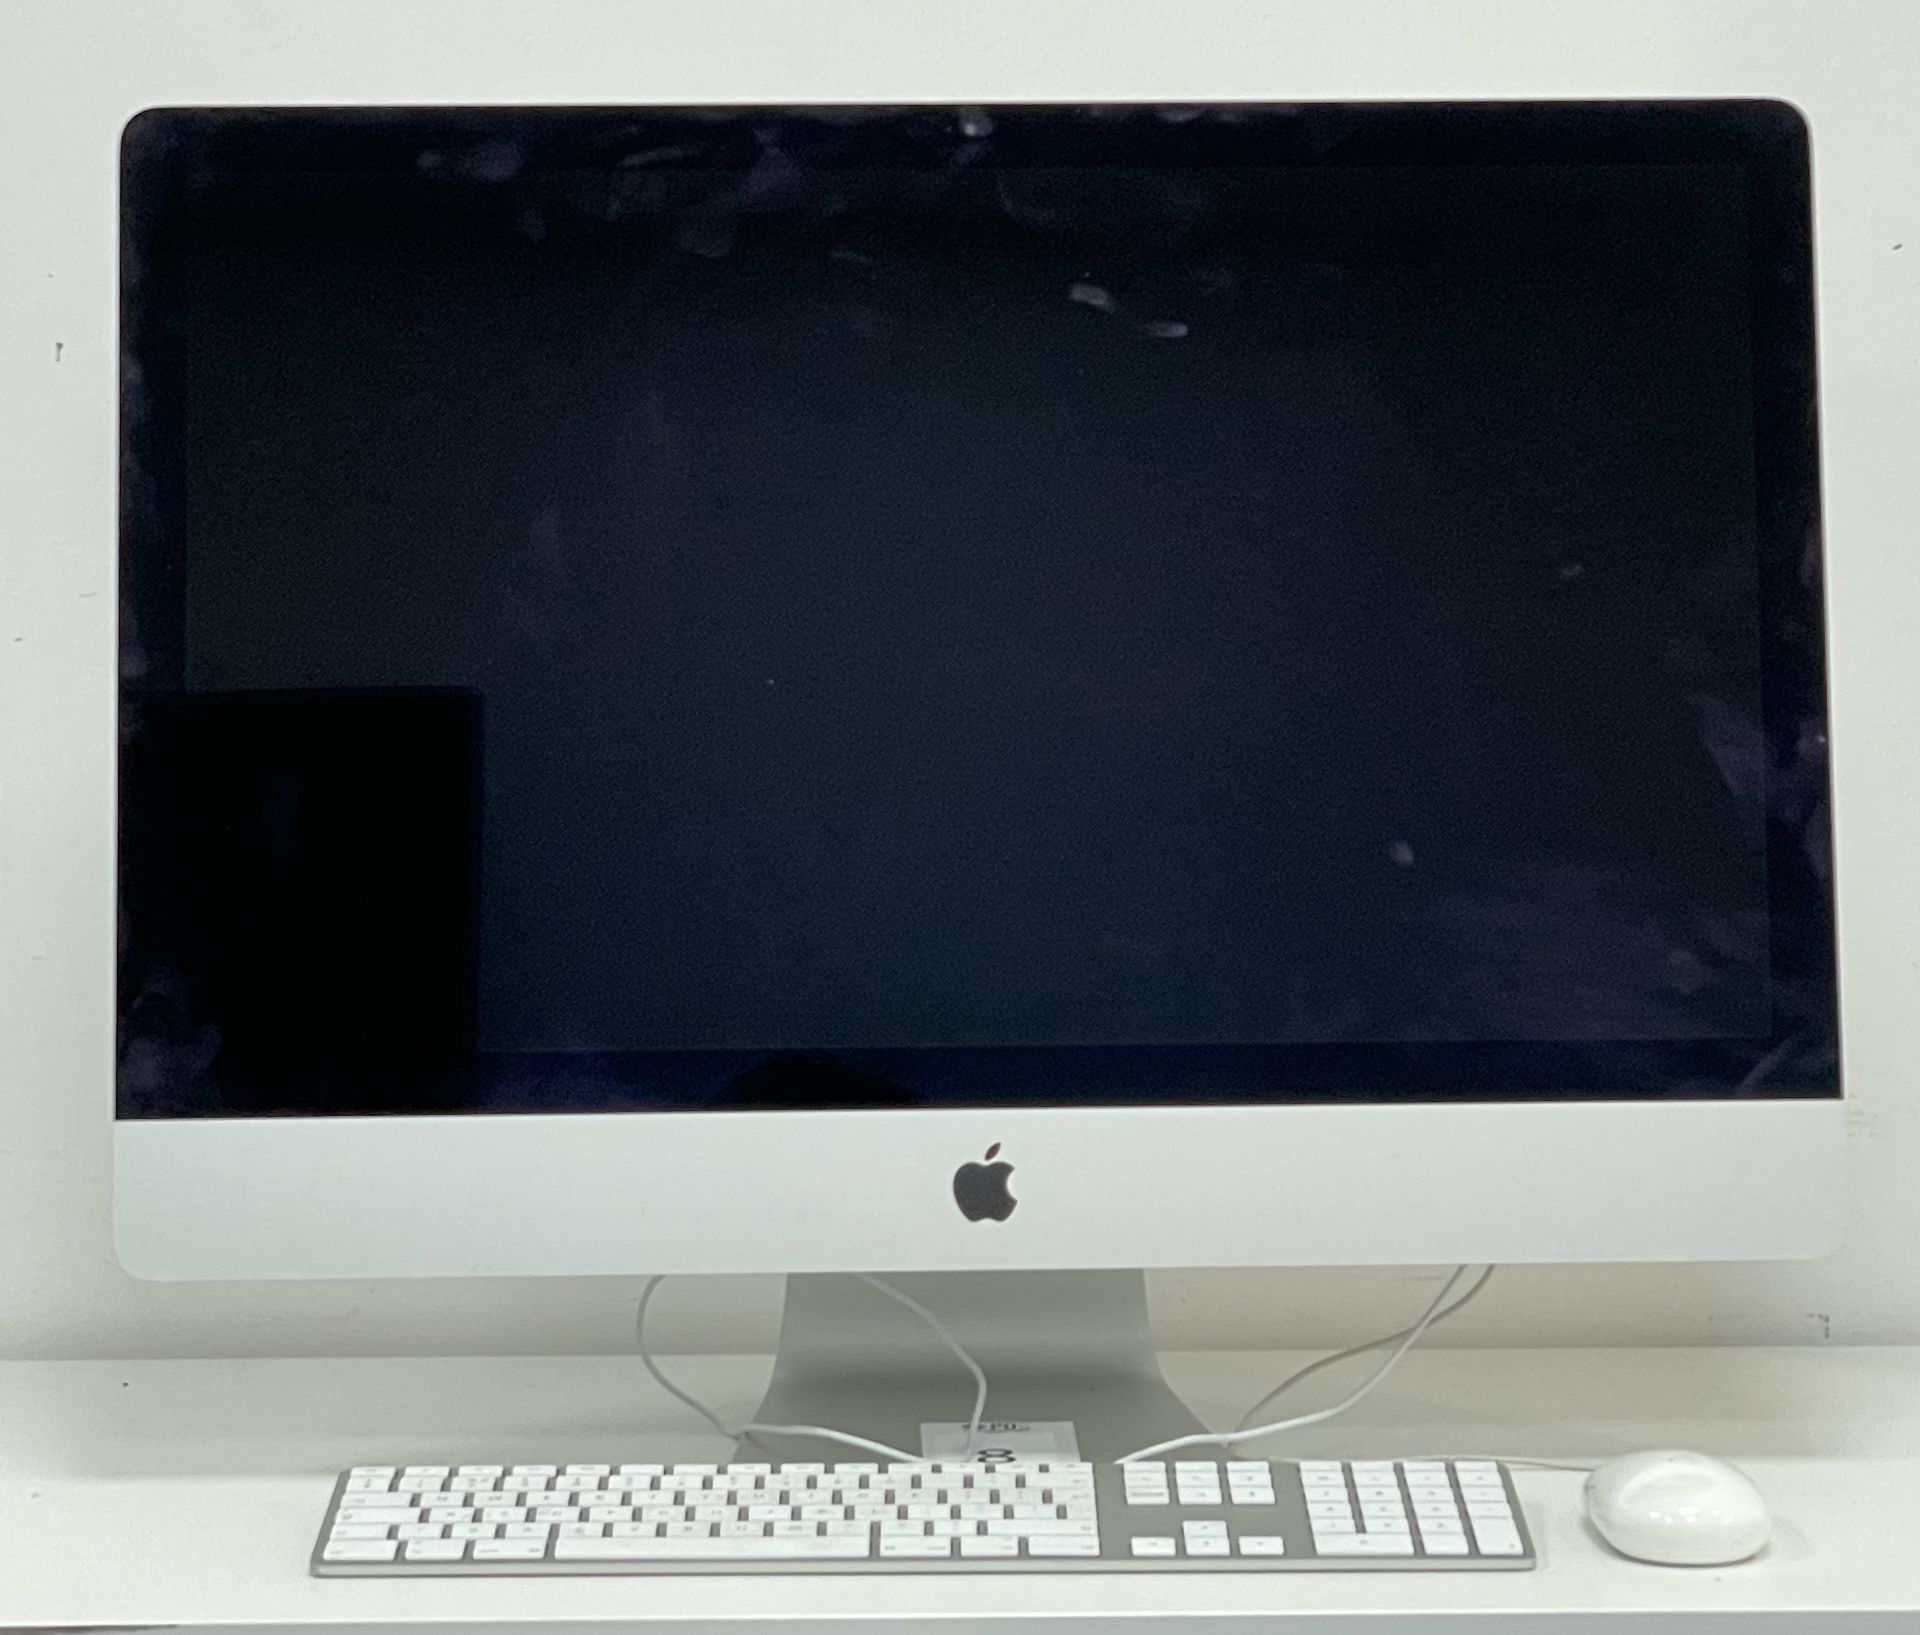 Apple iMac (A1419) Desktop Computer, Quad-Core Intel Core i5 CPU @ 3.2 GHz, 8 GB RAM, 1TB HDD, S/N